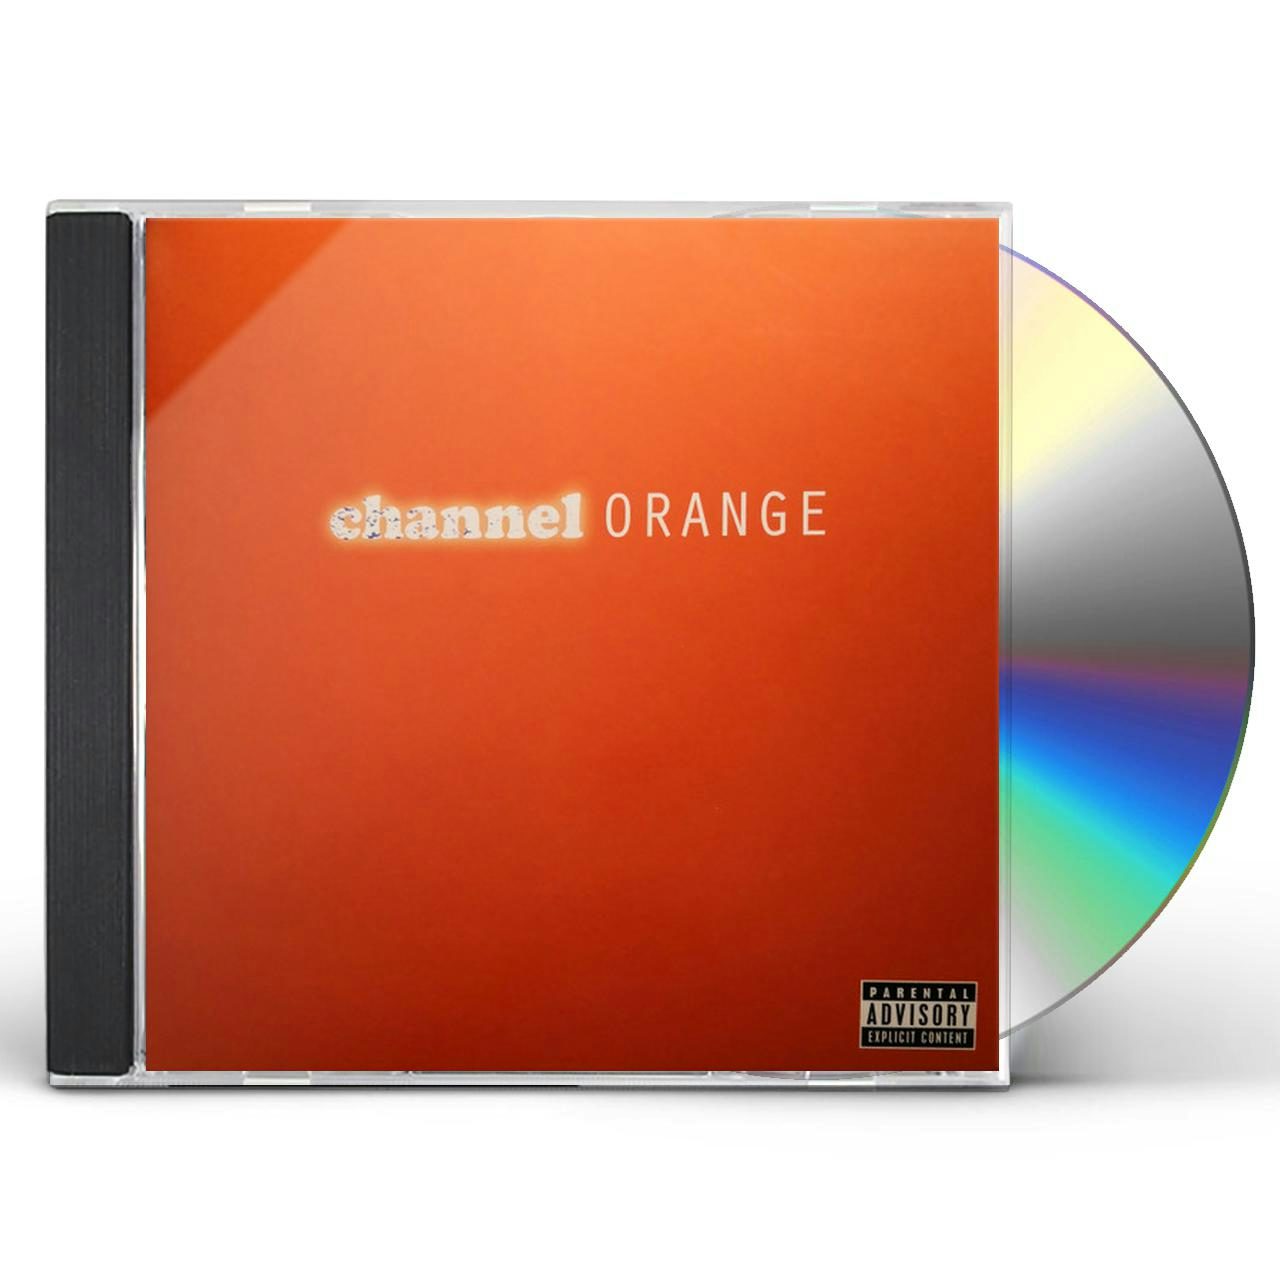 channel ORANGE Vinyl Record - Frank Ocean